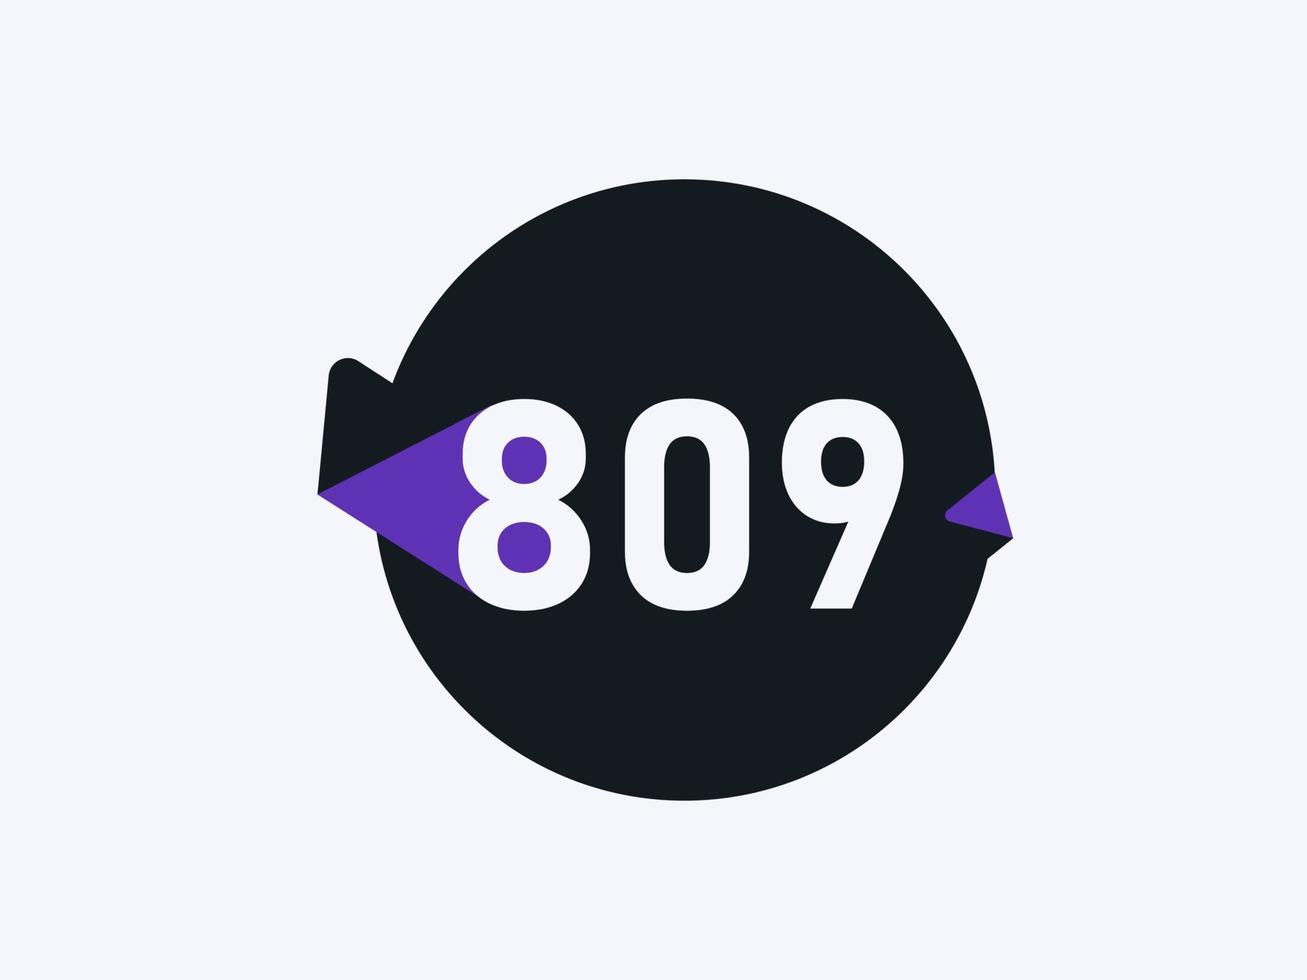 809 Number logo icon design vector image. Number logo icon design vector image